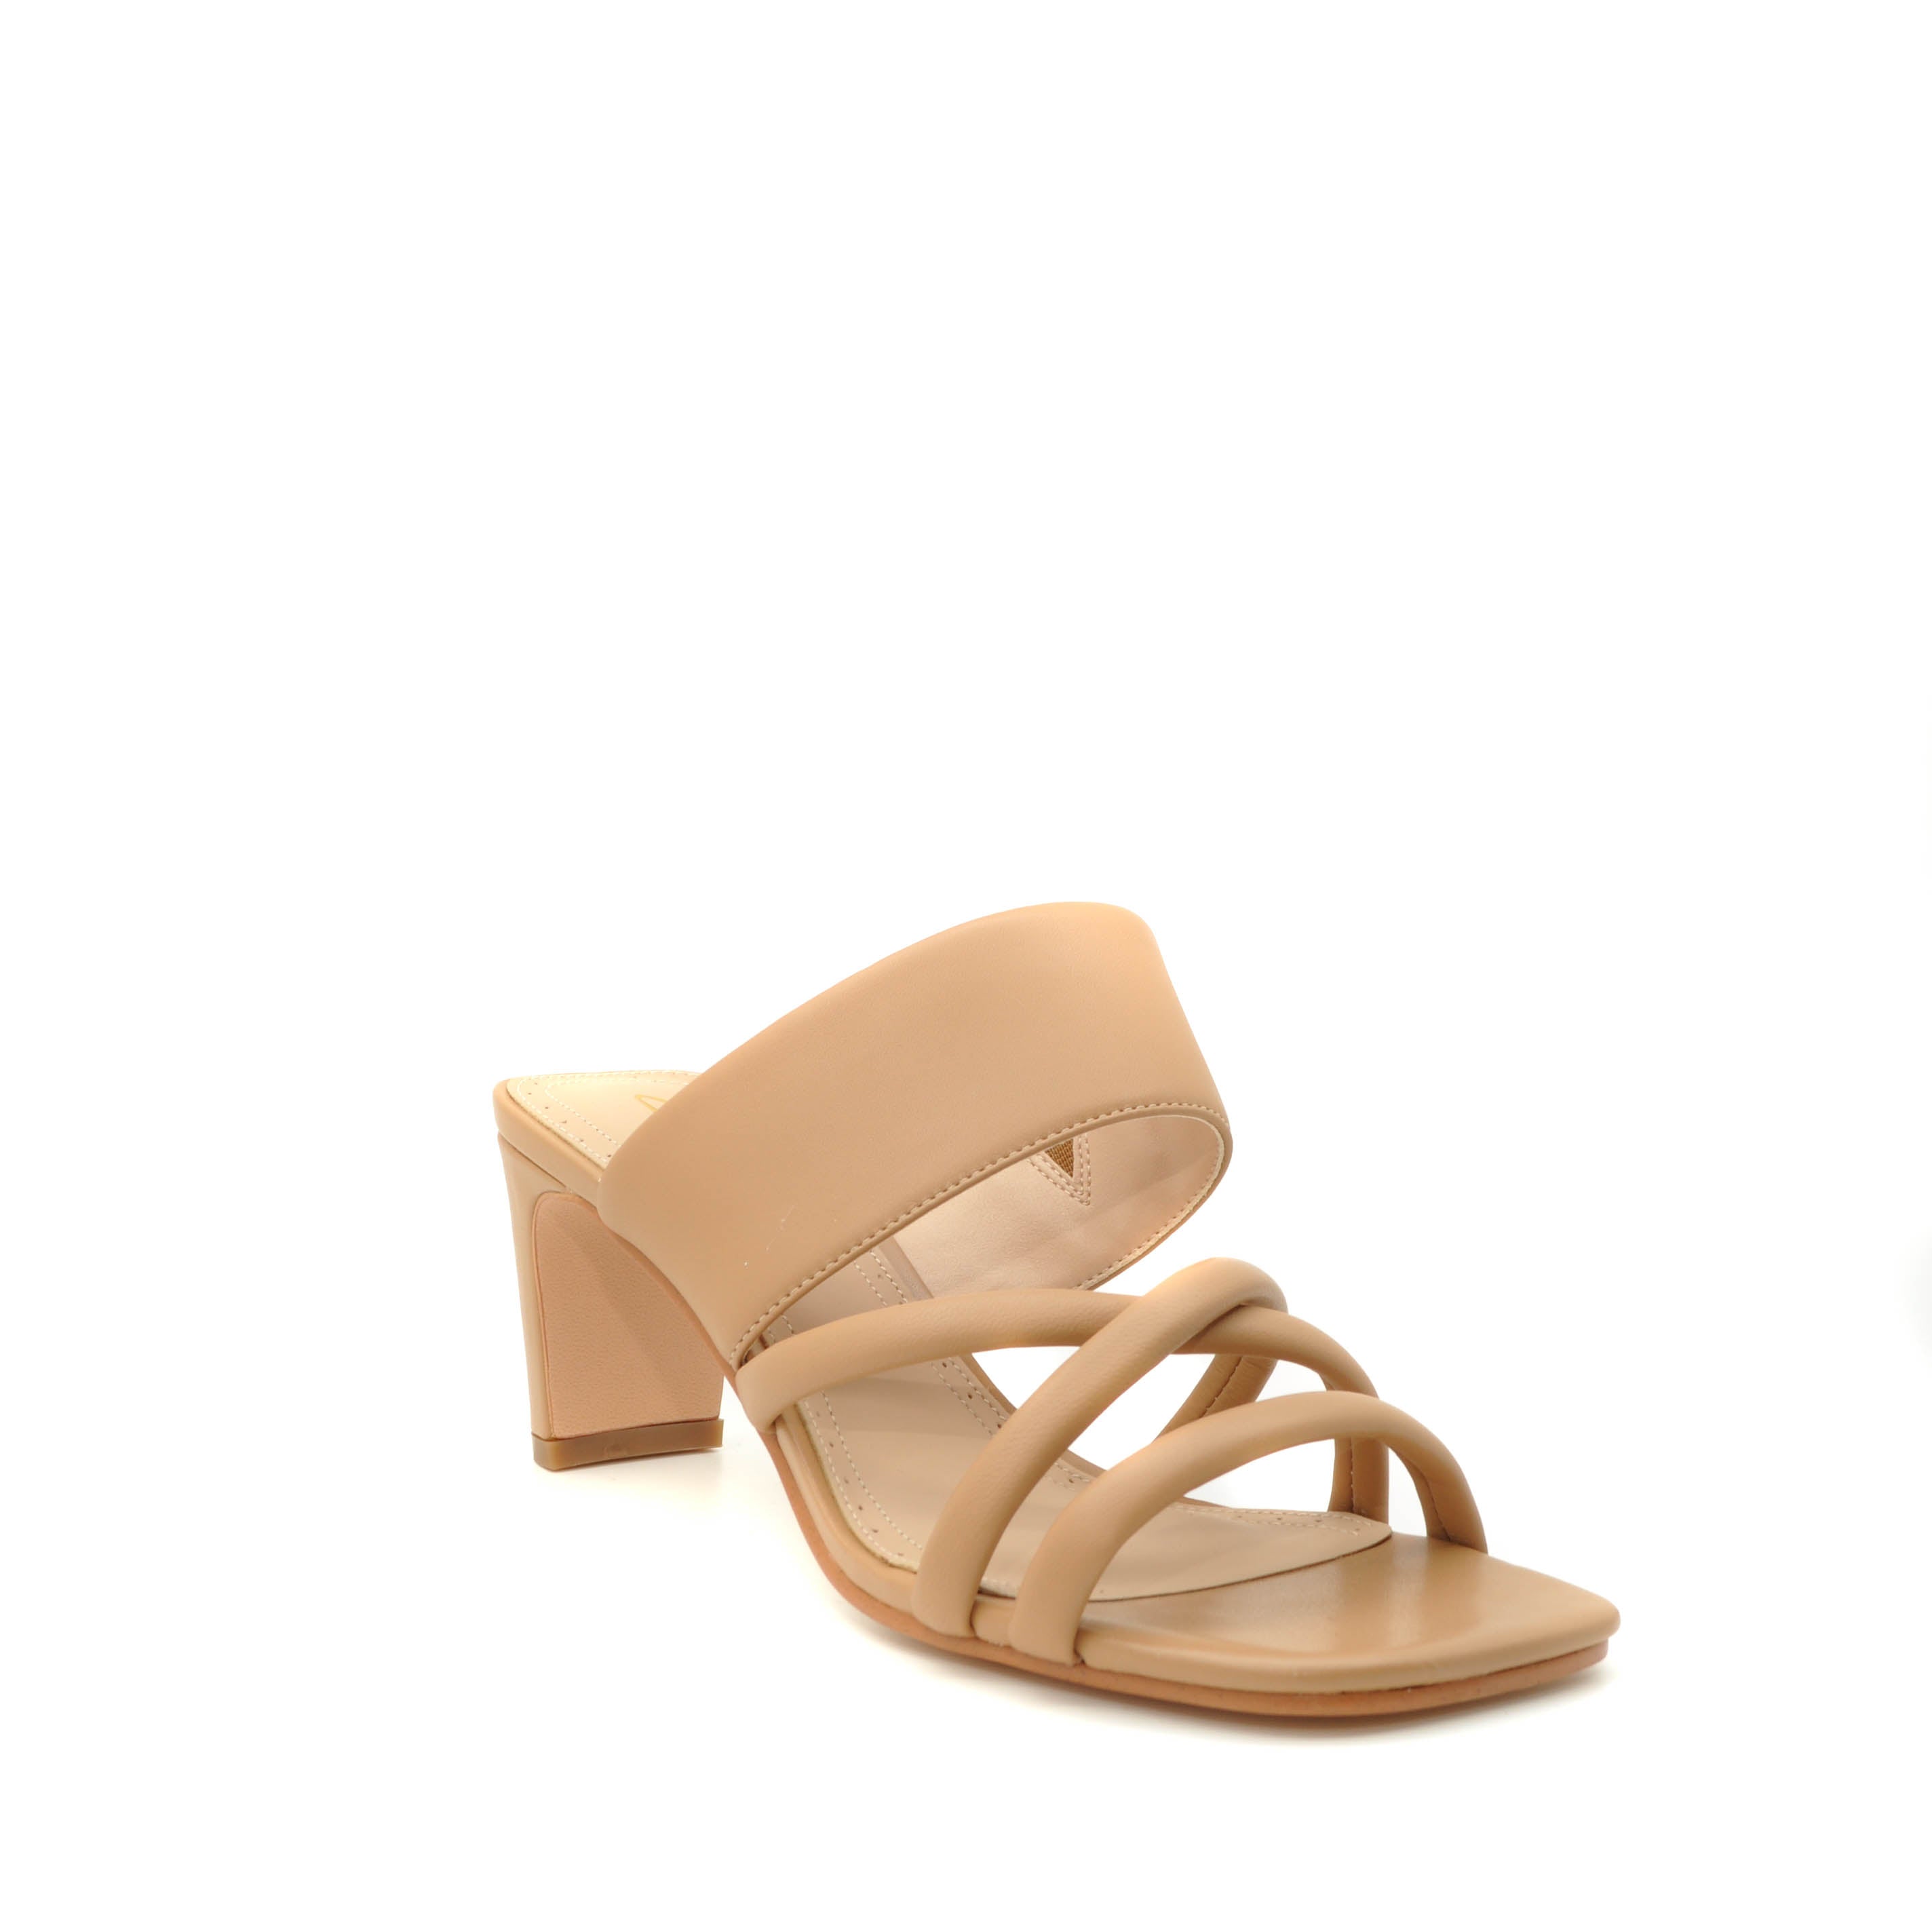 Overholdelse af Søjle svimmel CLARKS sandals online ireland | heels | low heels | mule heels